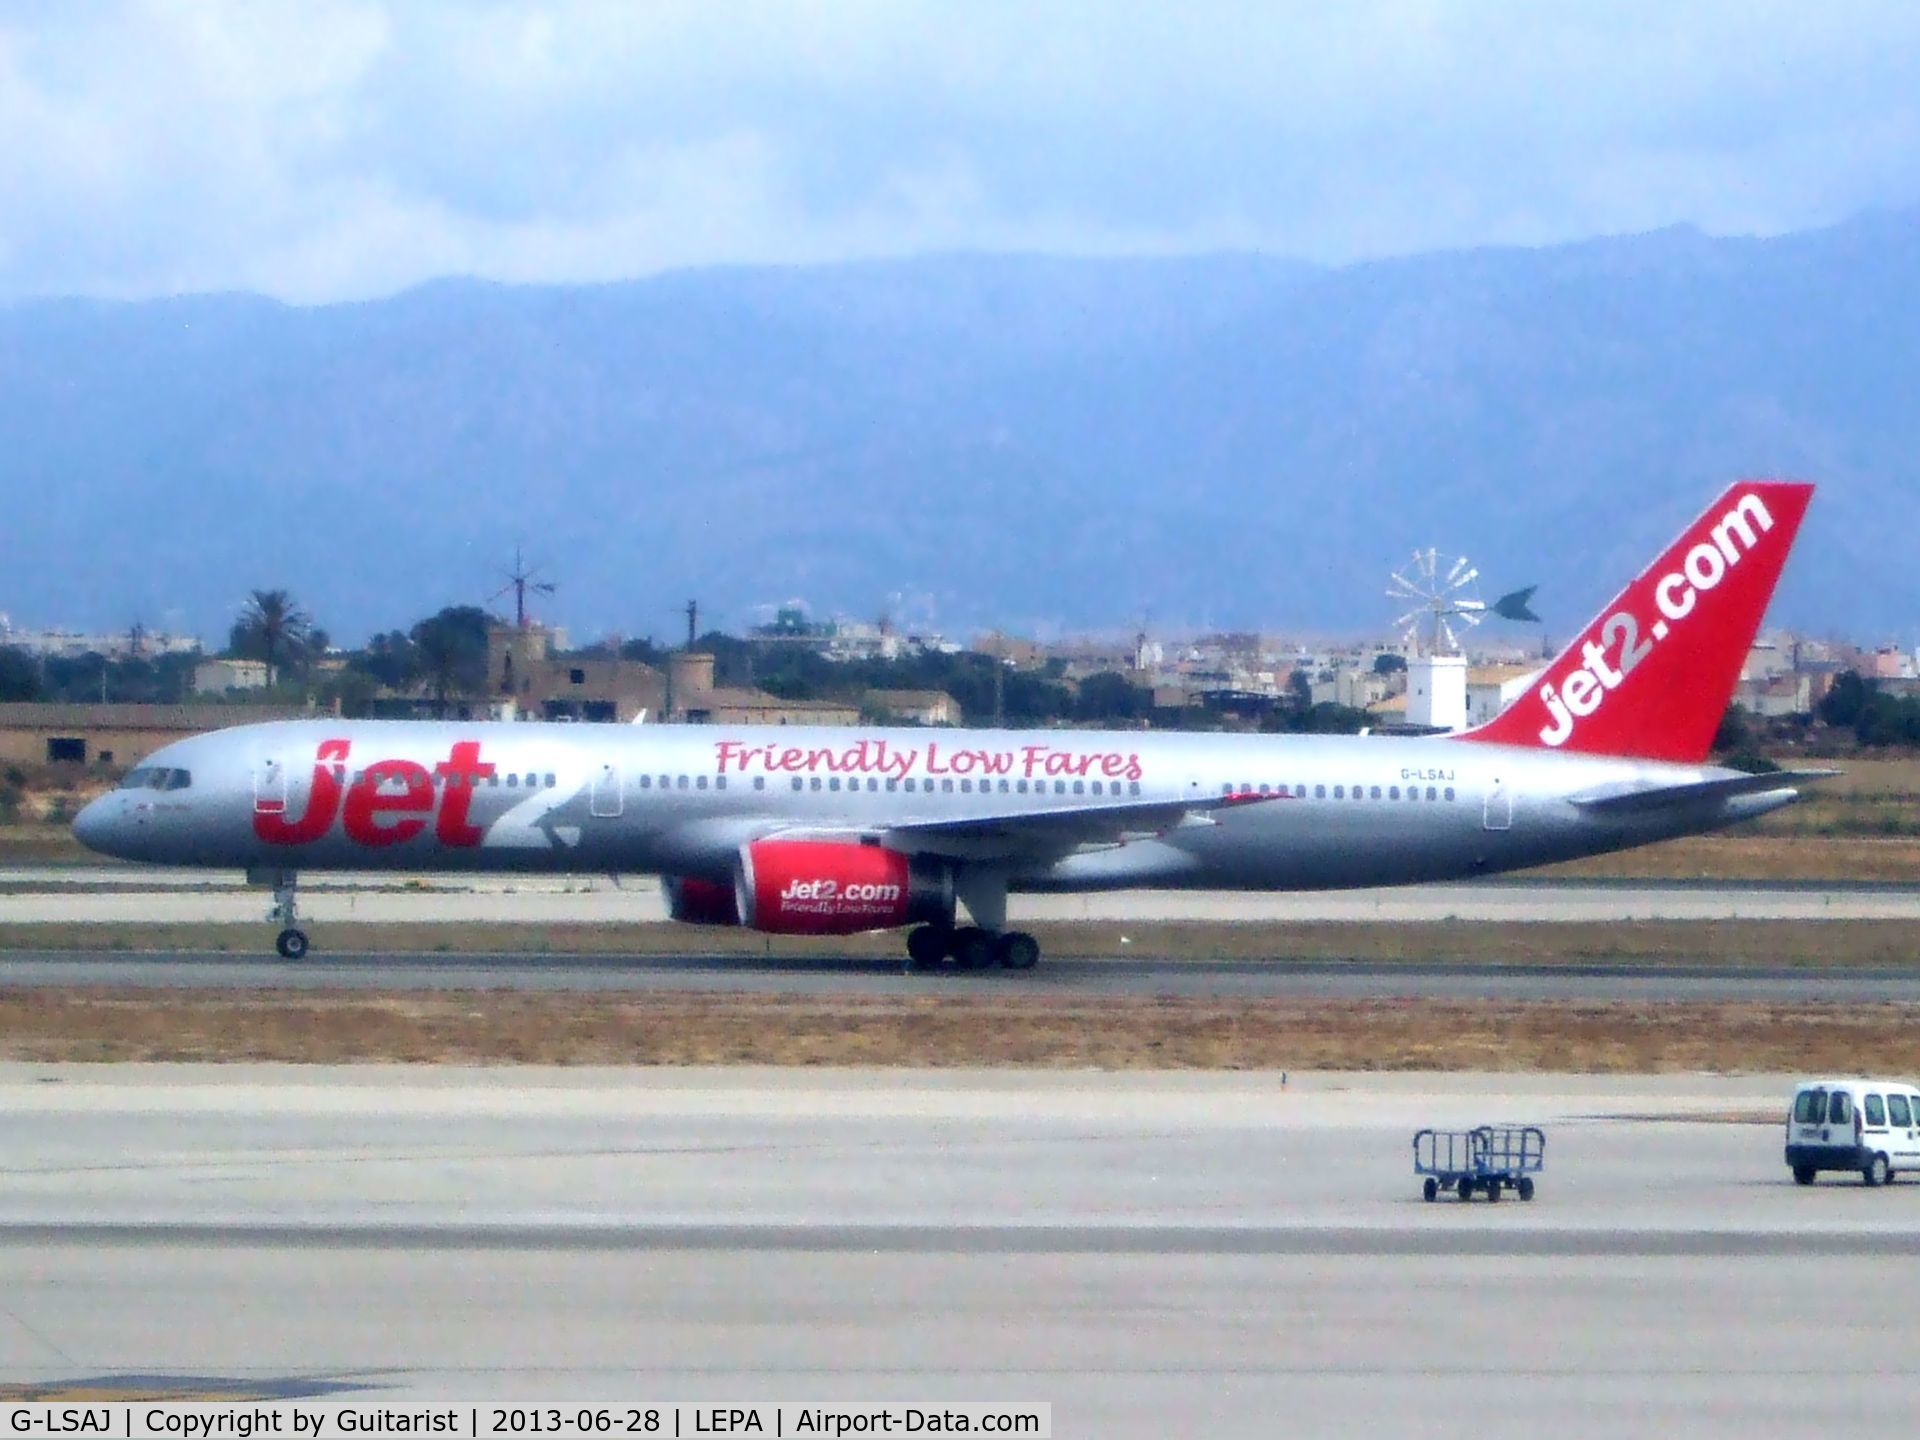 G-LSAJ, 1990 Boeing 757-236 C/N 24793, Just landed on 06L